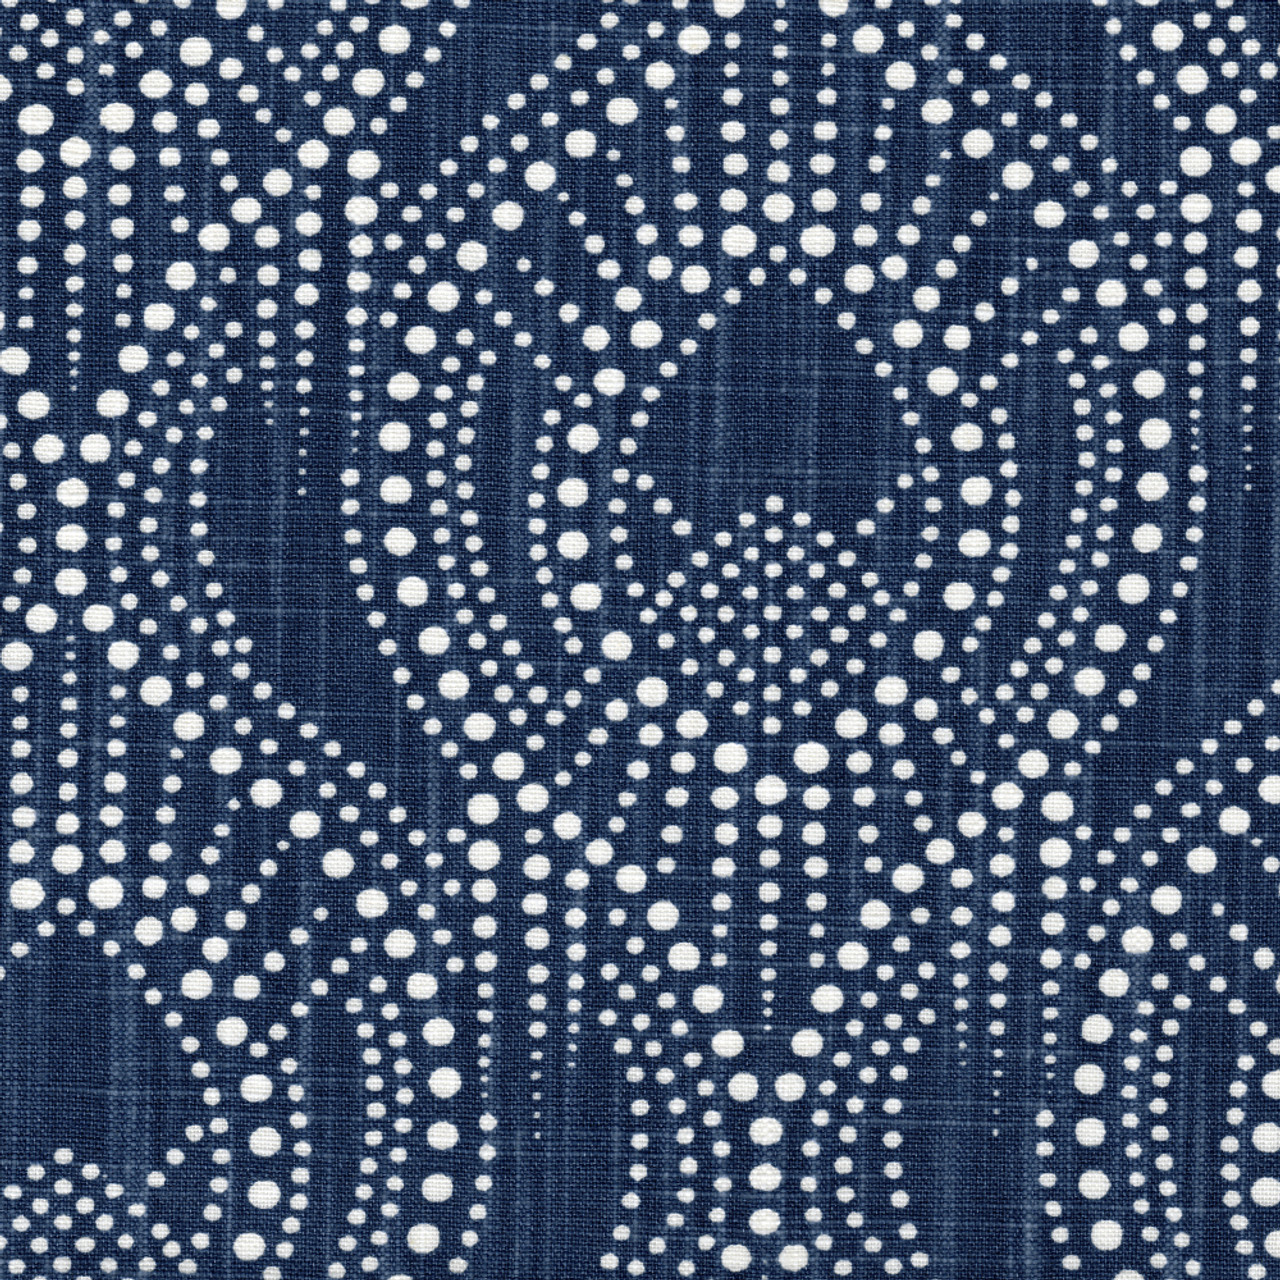 Duvet Cover In Alyssa Regal Navy Dotted Print Close To Custom Linens